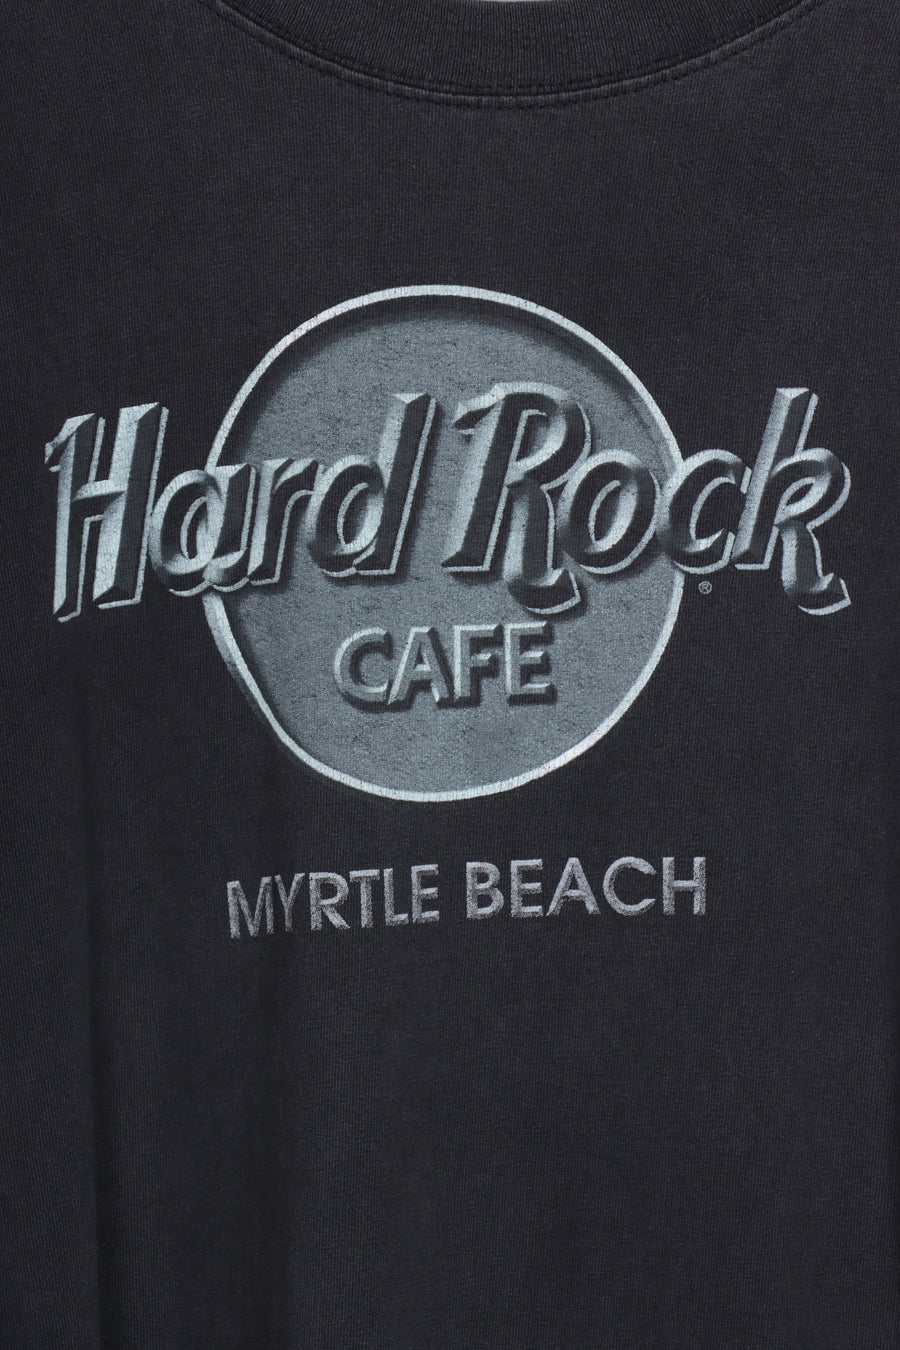 HARD ROCK CAFE Myrtle Beach Black Destination Tee (XXL)